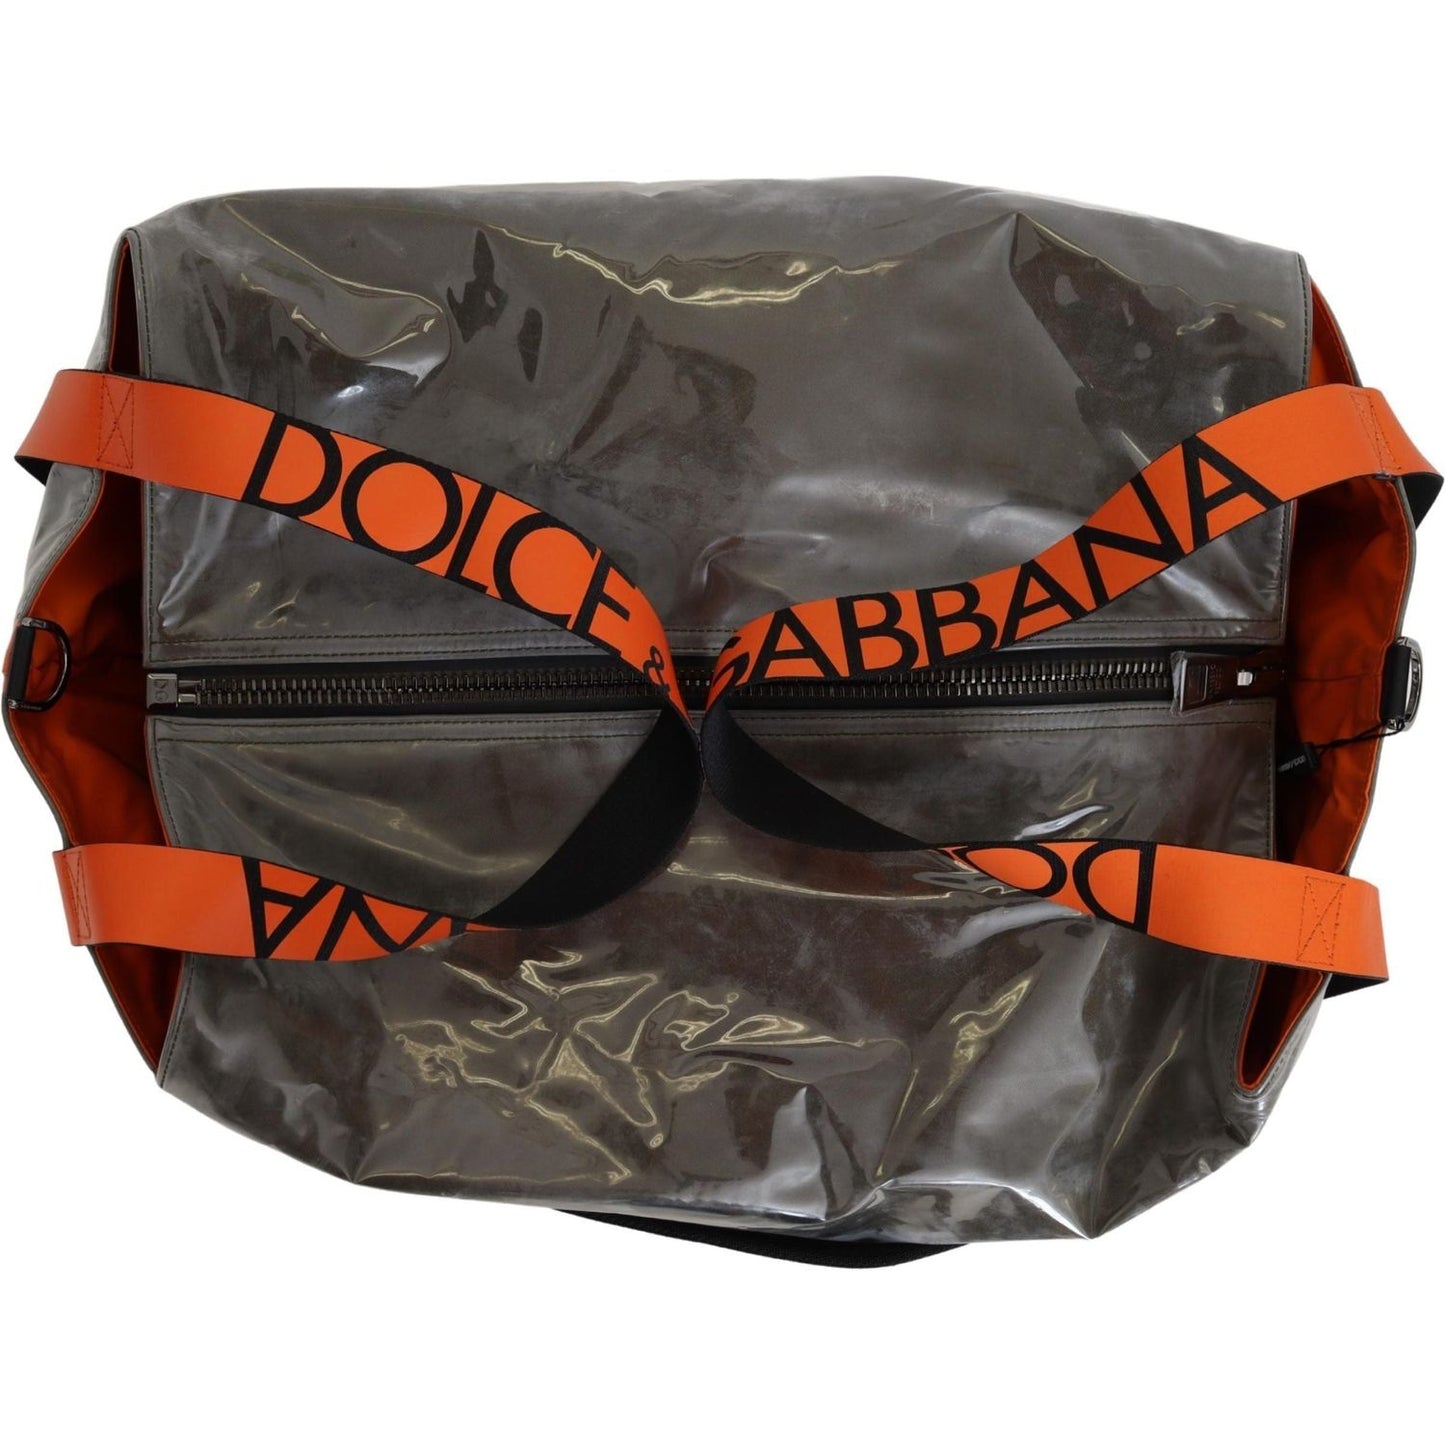 Dolce & Gabbana Sumptuous Green Large Fabric Tote Bag cotton-men-large-fabric-green-shopping-tote-bag IMG_3486-scaled-63cb7119-828.jpg